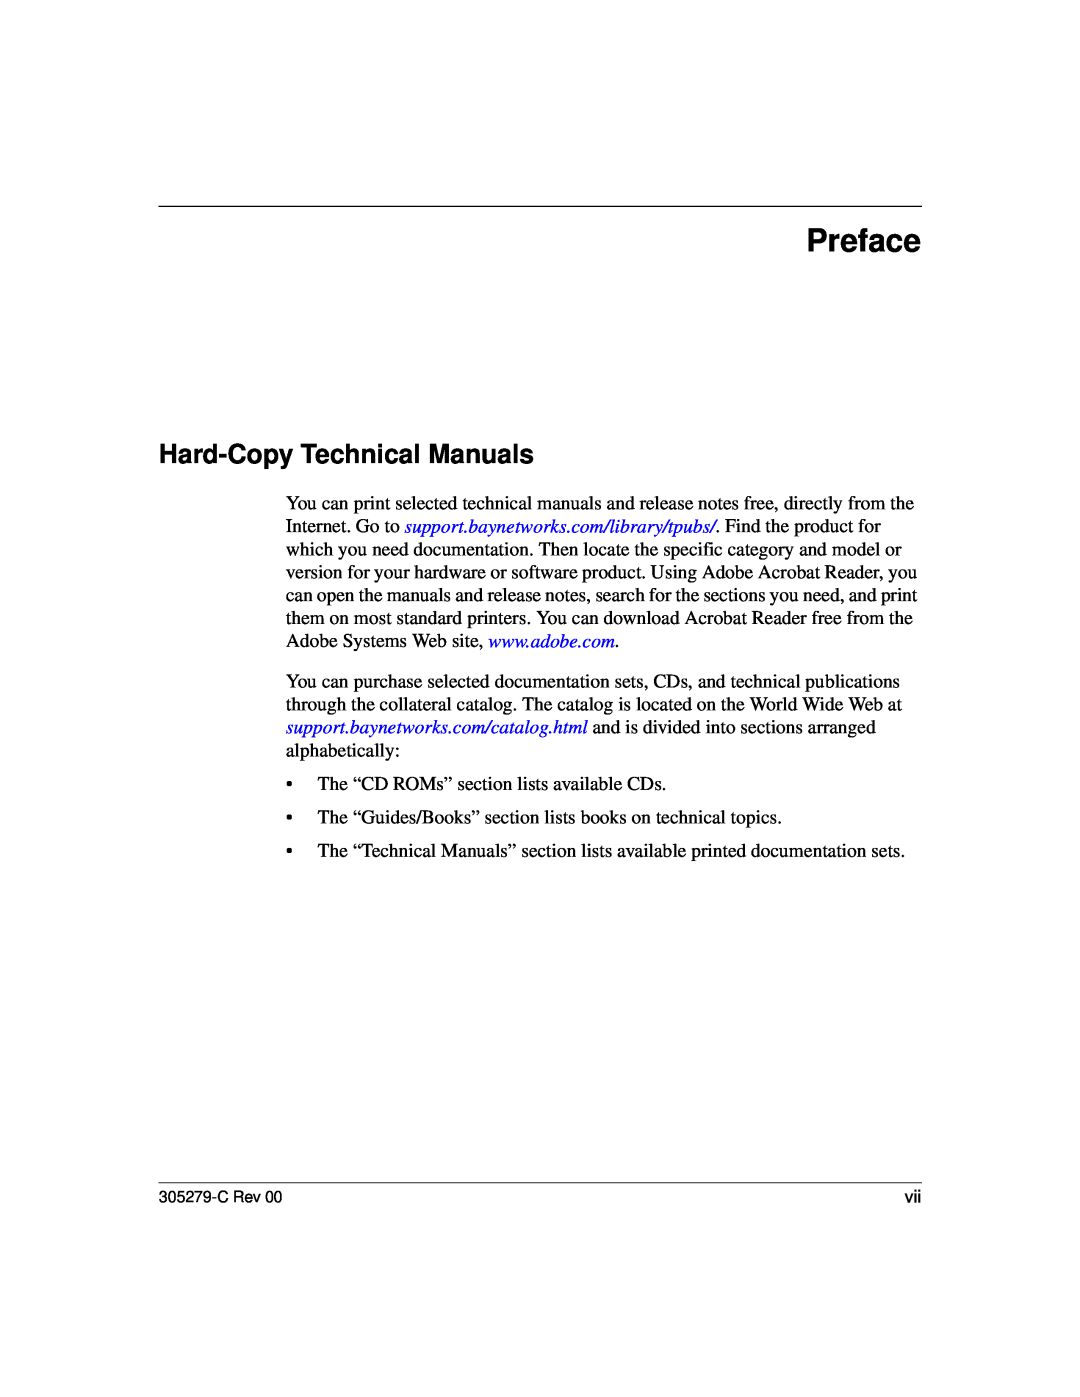 Nortel Networks 13.03 manual Preface, Hard-Copy Technical Manuals 